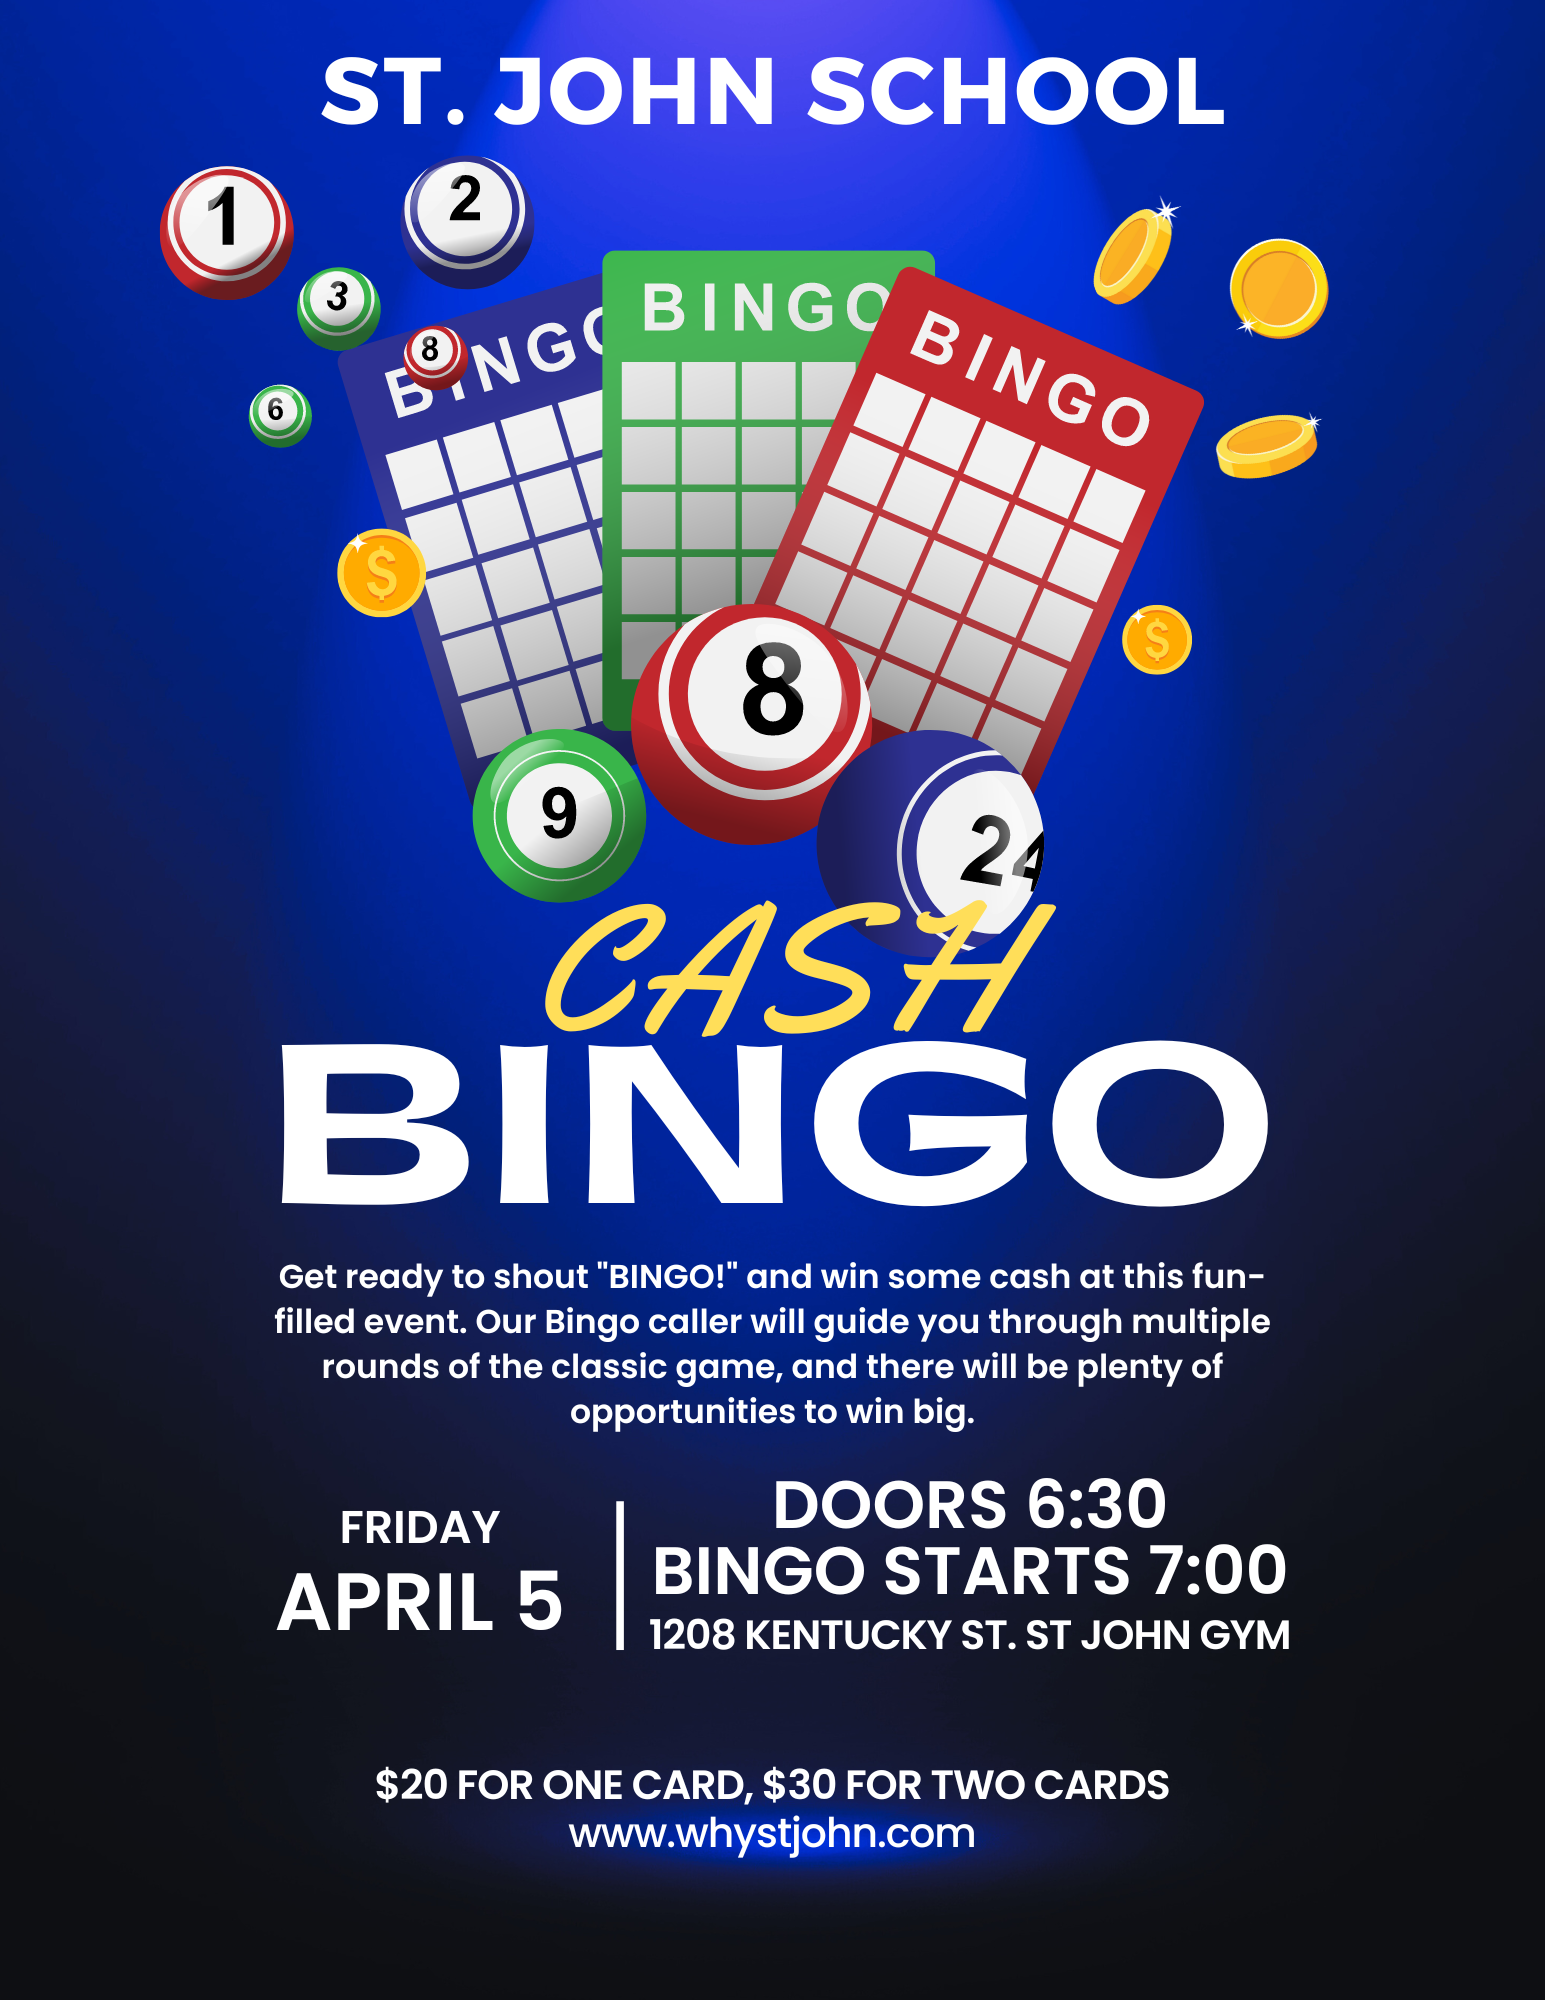 Featured image for “St. John School Cash Bingo”